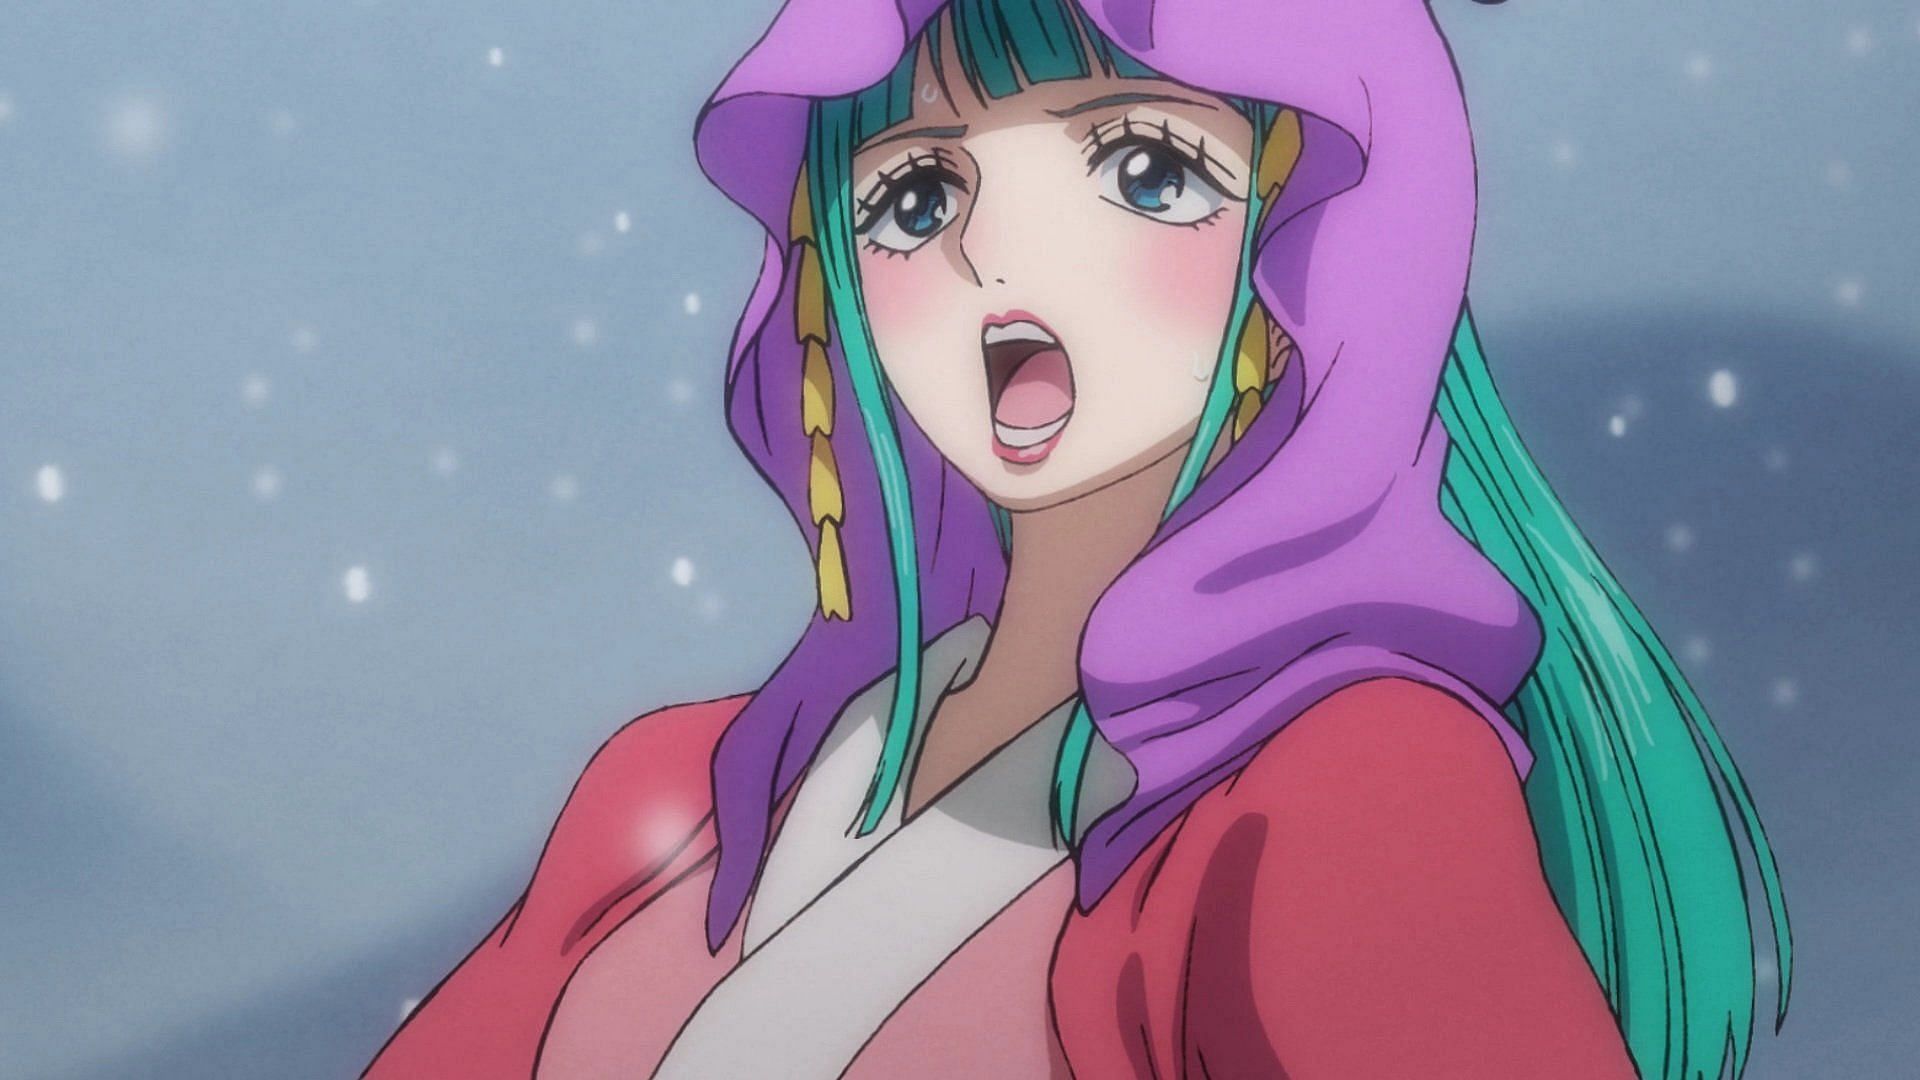 Hiyori as seen in the anime series (Image via Toei Animation)